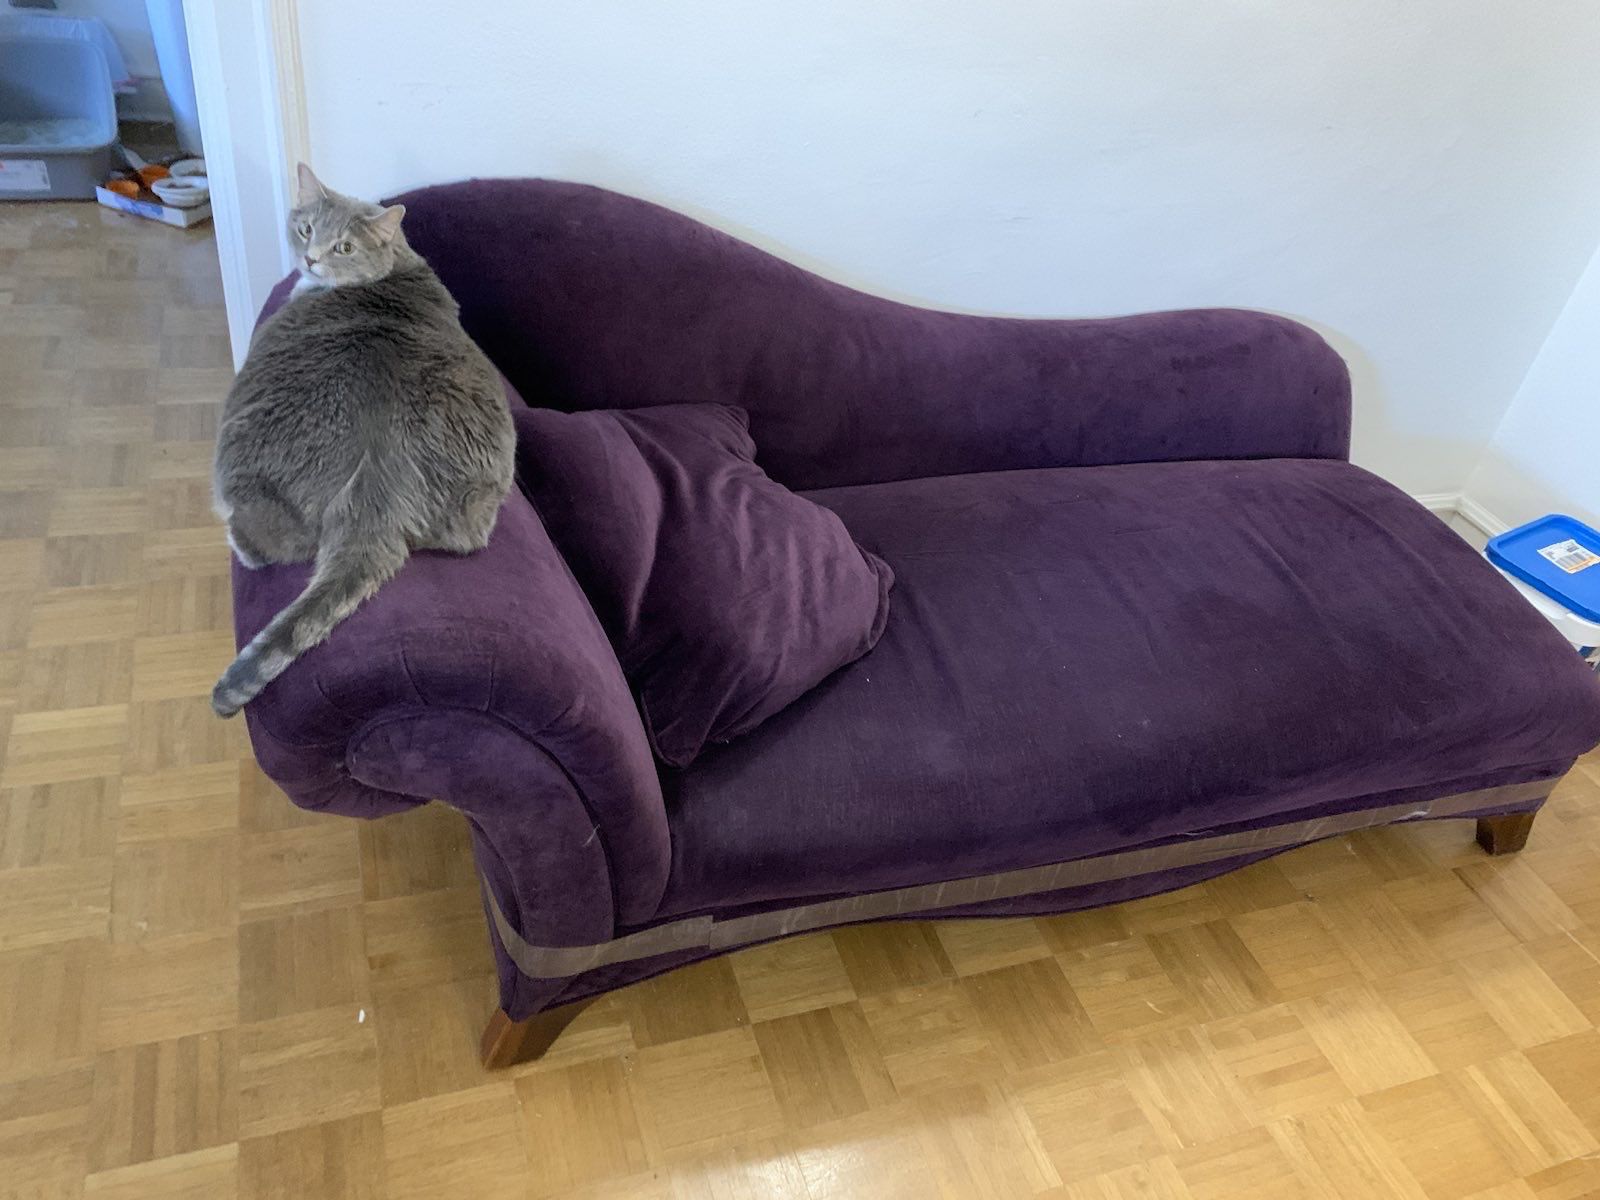 Vintage Purple Fainting Couch